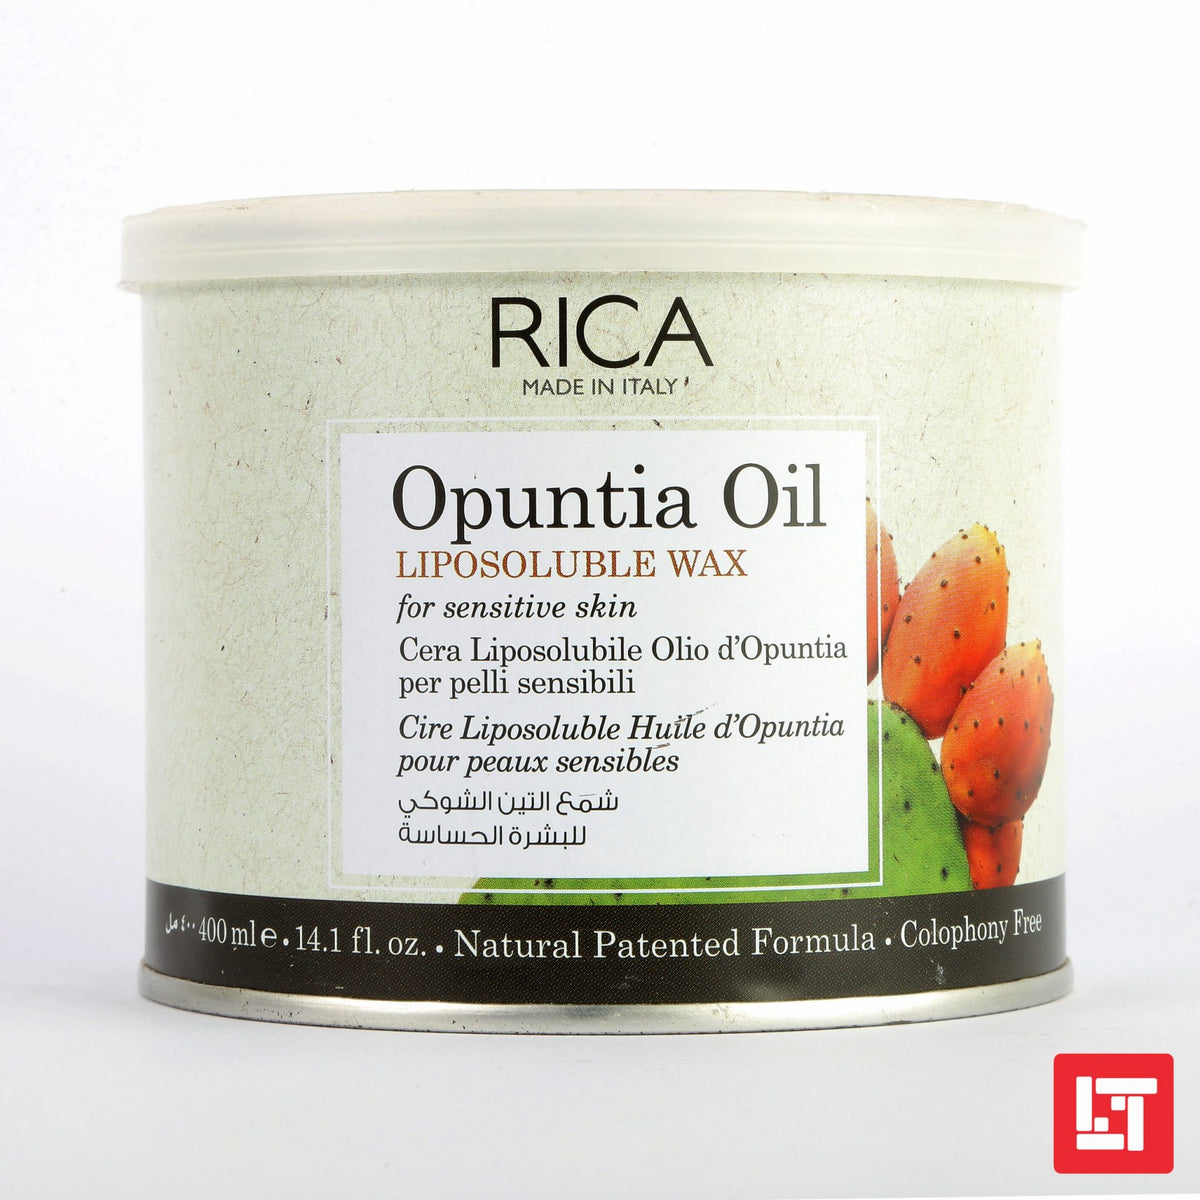 RICA Liposoluble Wax For Sensitive Skin Opuntia Oil 400ml freeshipping - lasertag.pk